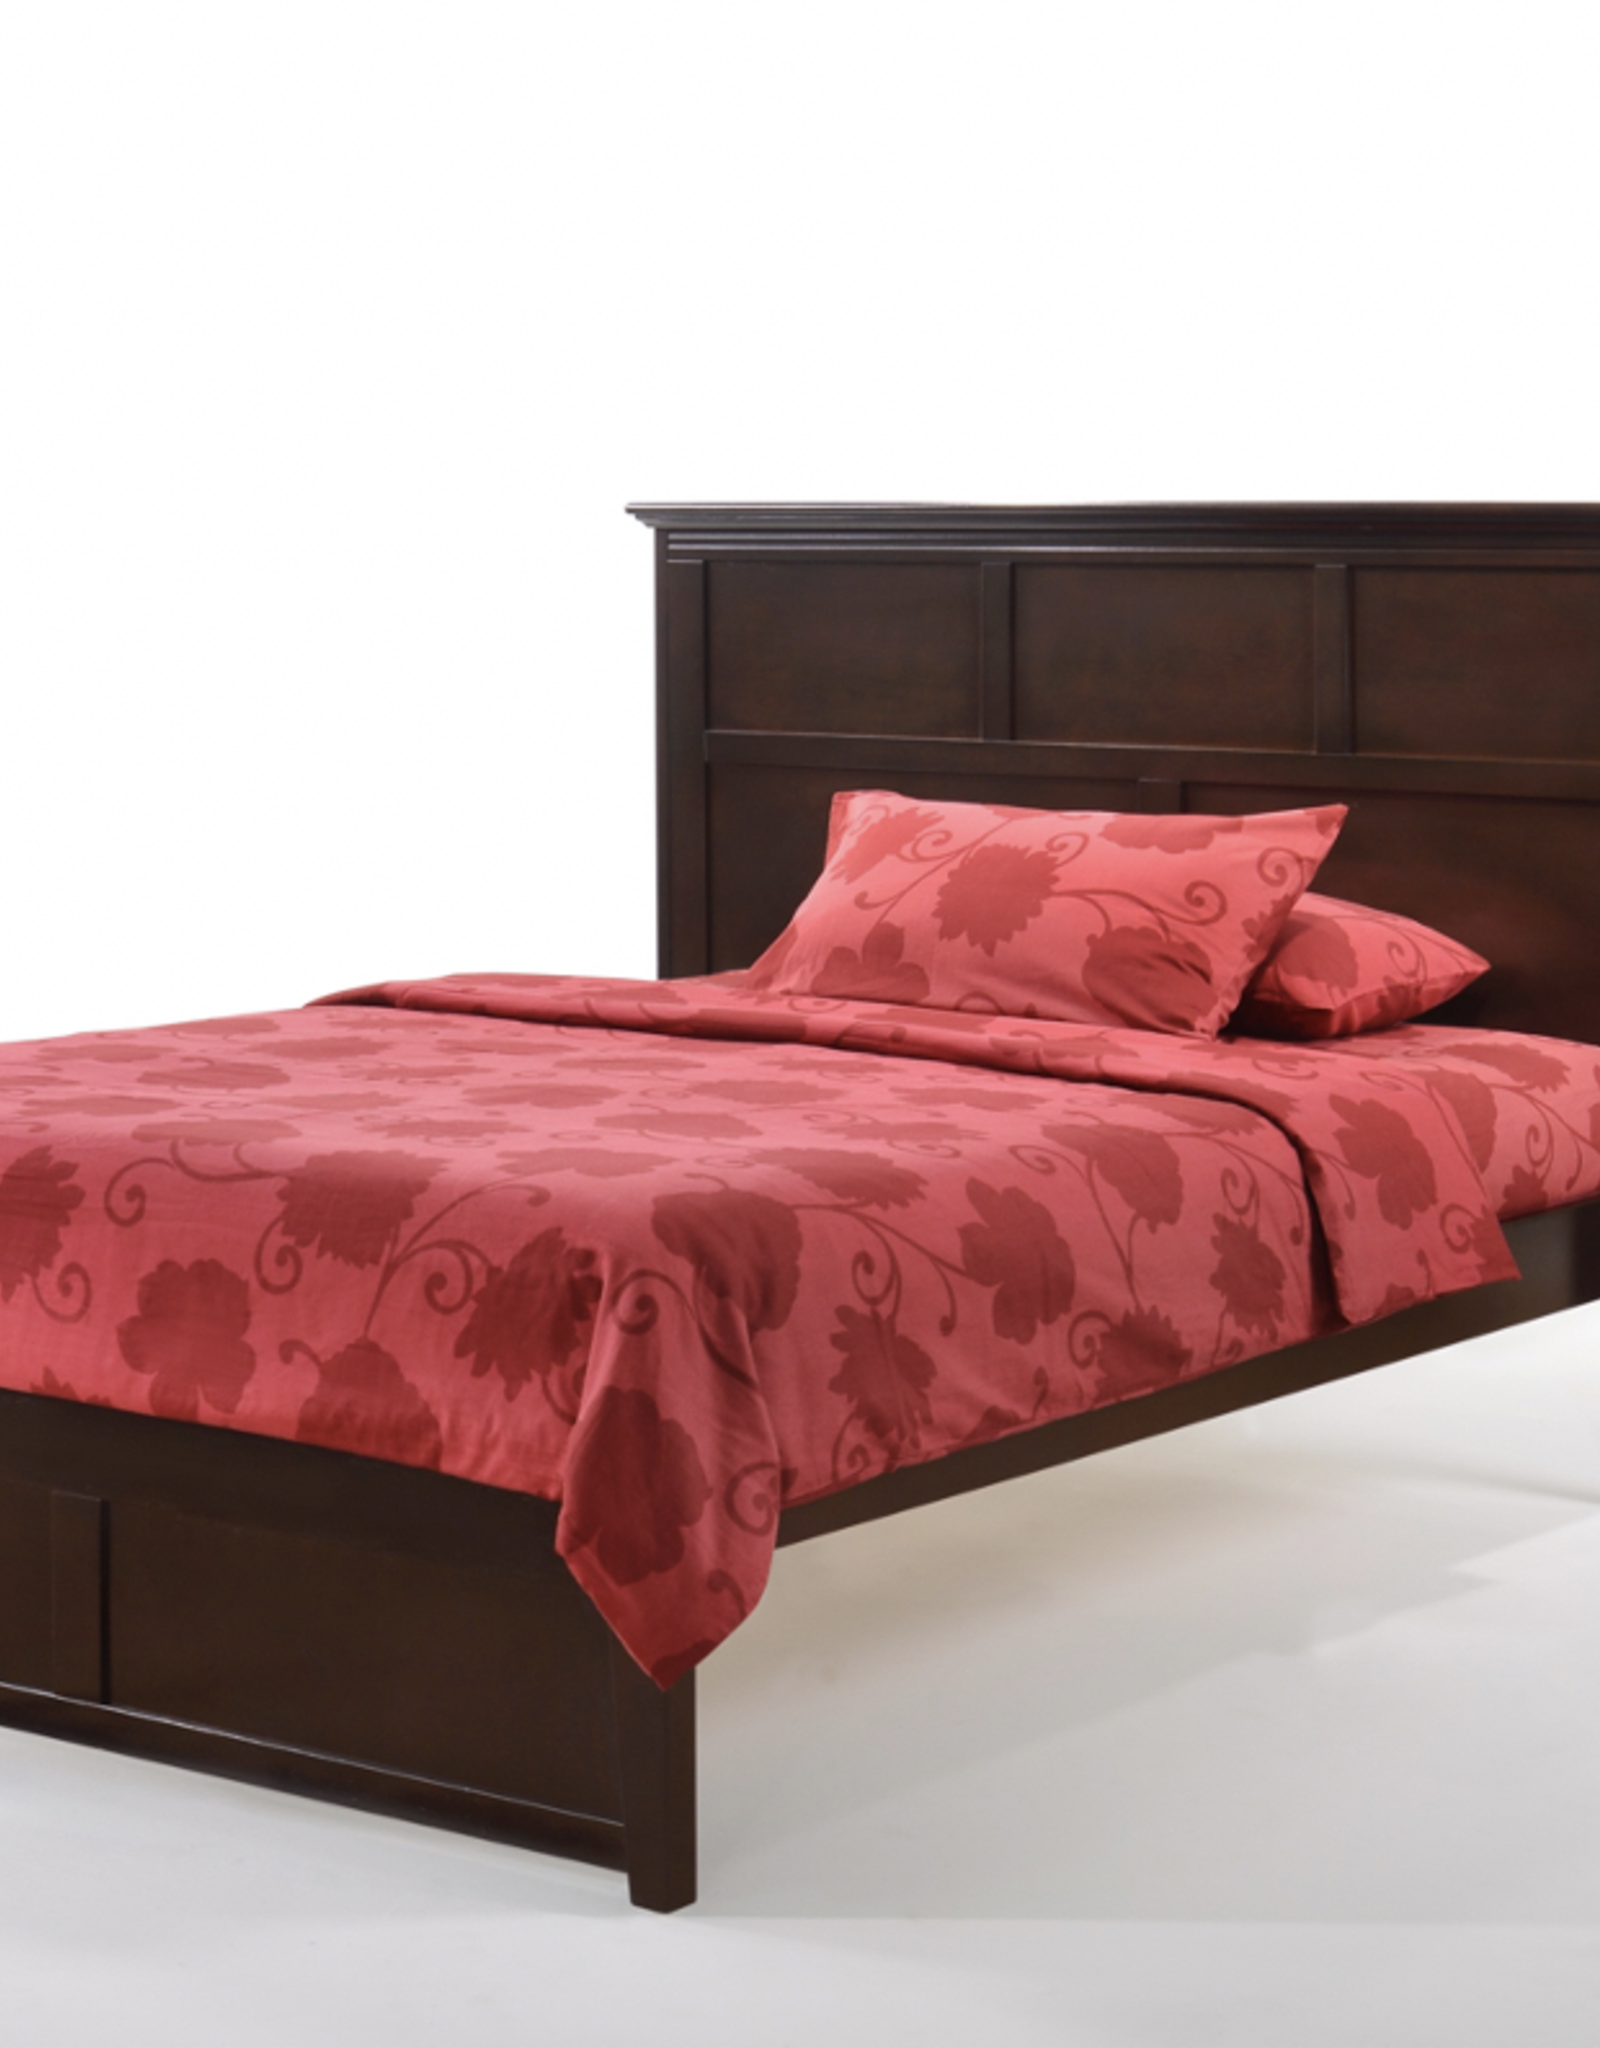 Tarragon Platform Bed - Comes in Five Colors